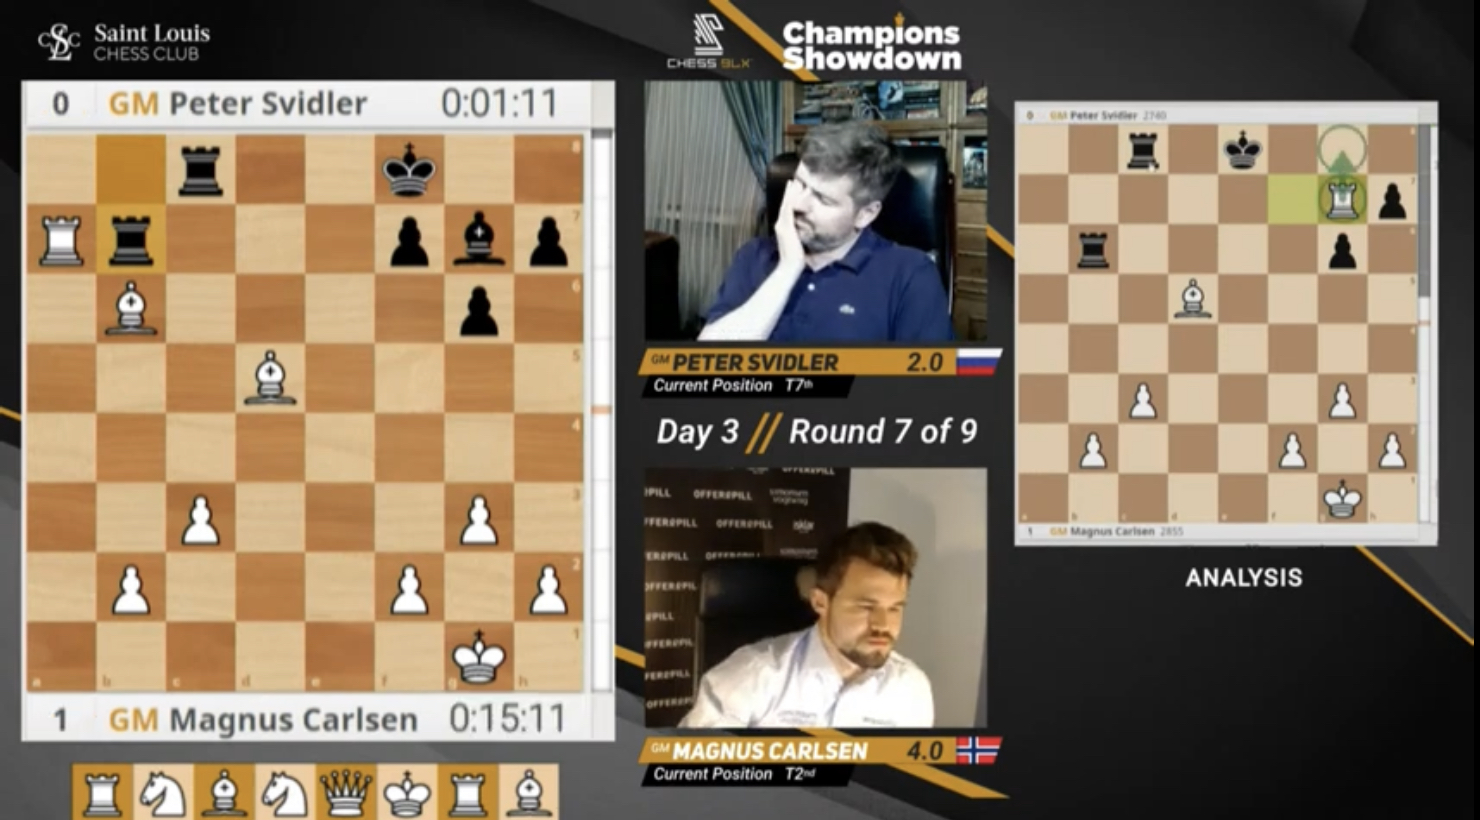 Magnus Carlsen's Mouse Slip Lost Last Match as World Champion